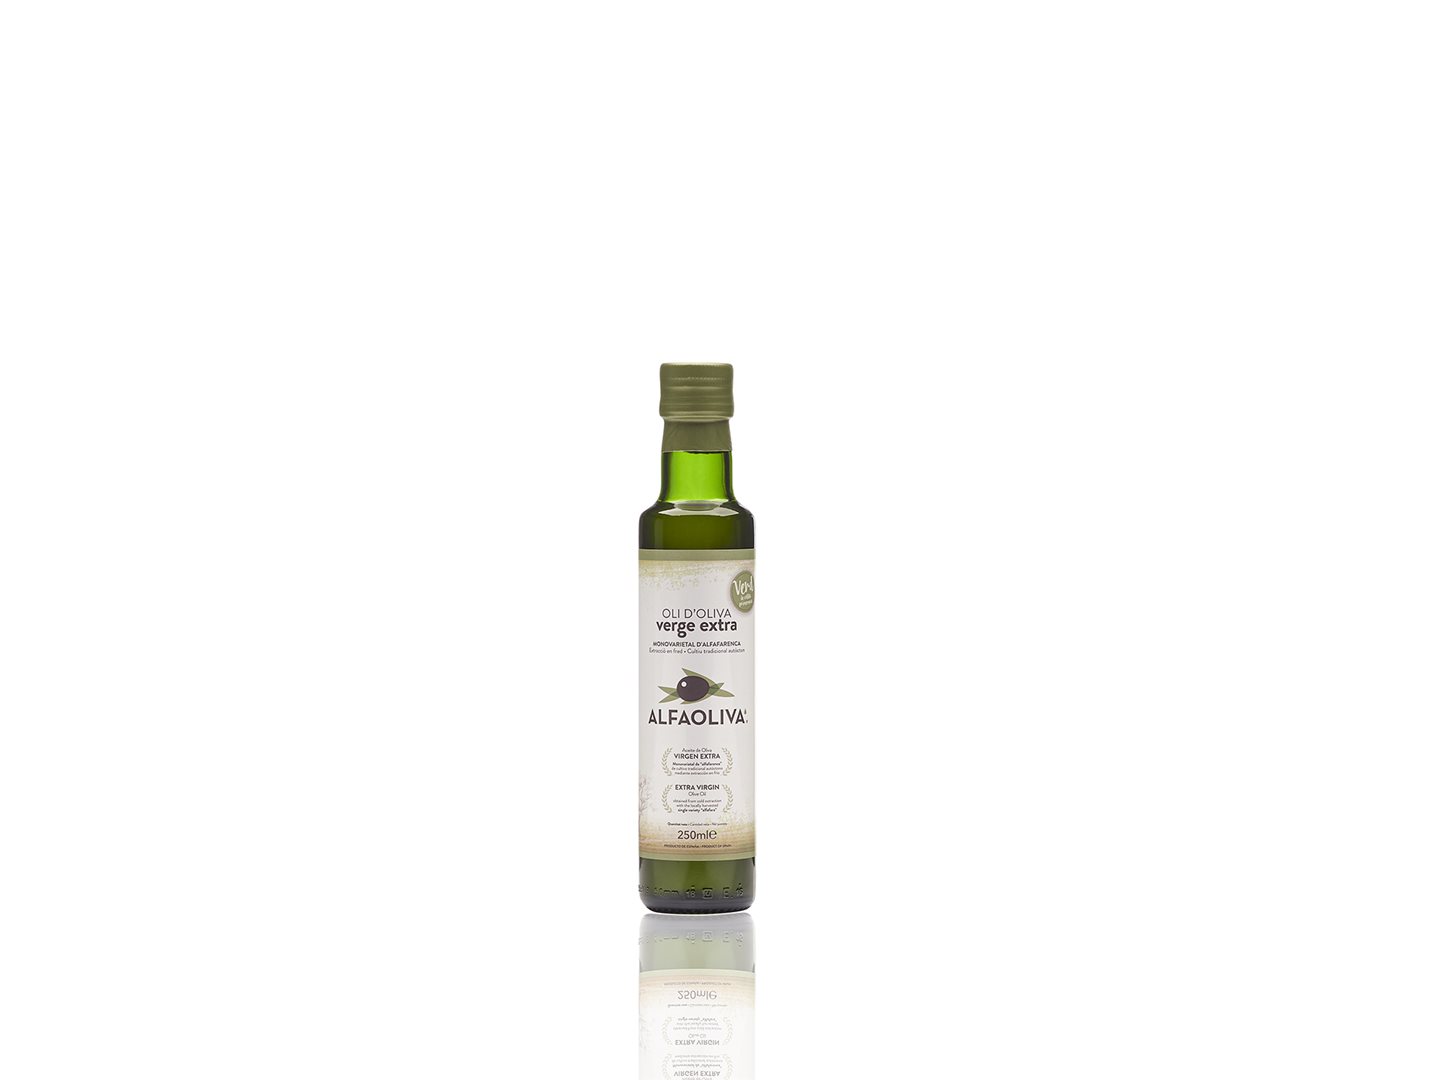 Aceite de Oliva Virgen Extra VERDE-250ml- Monovarietal de Alfafarenca. Recolección aceituna en verde